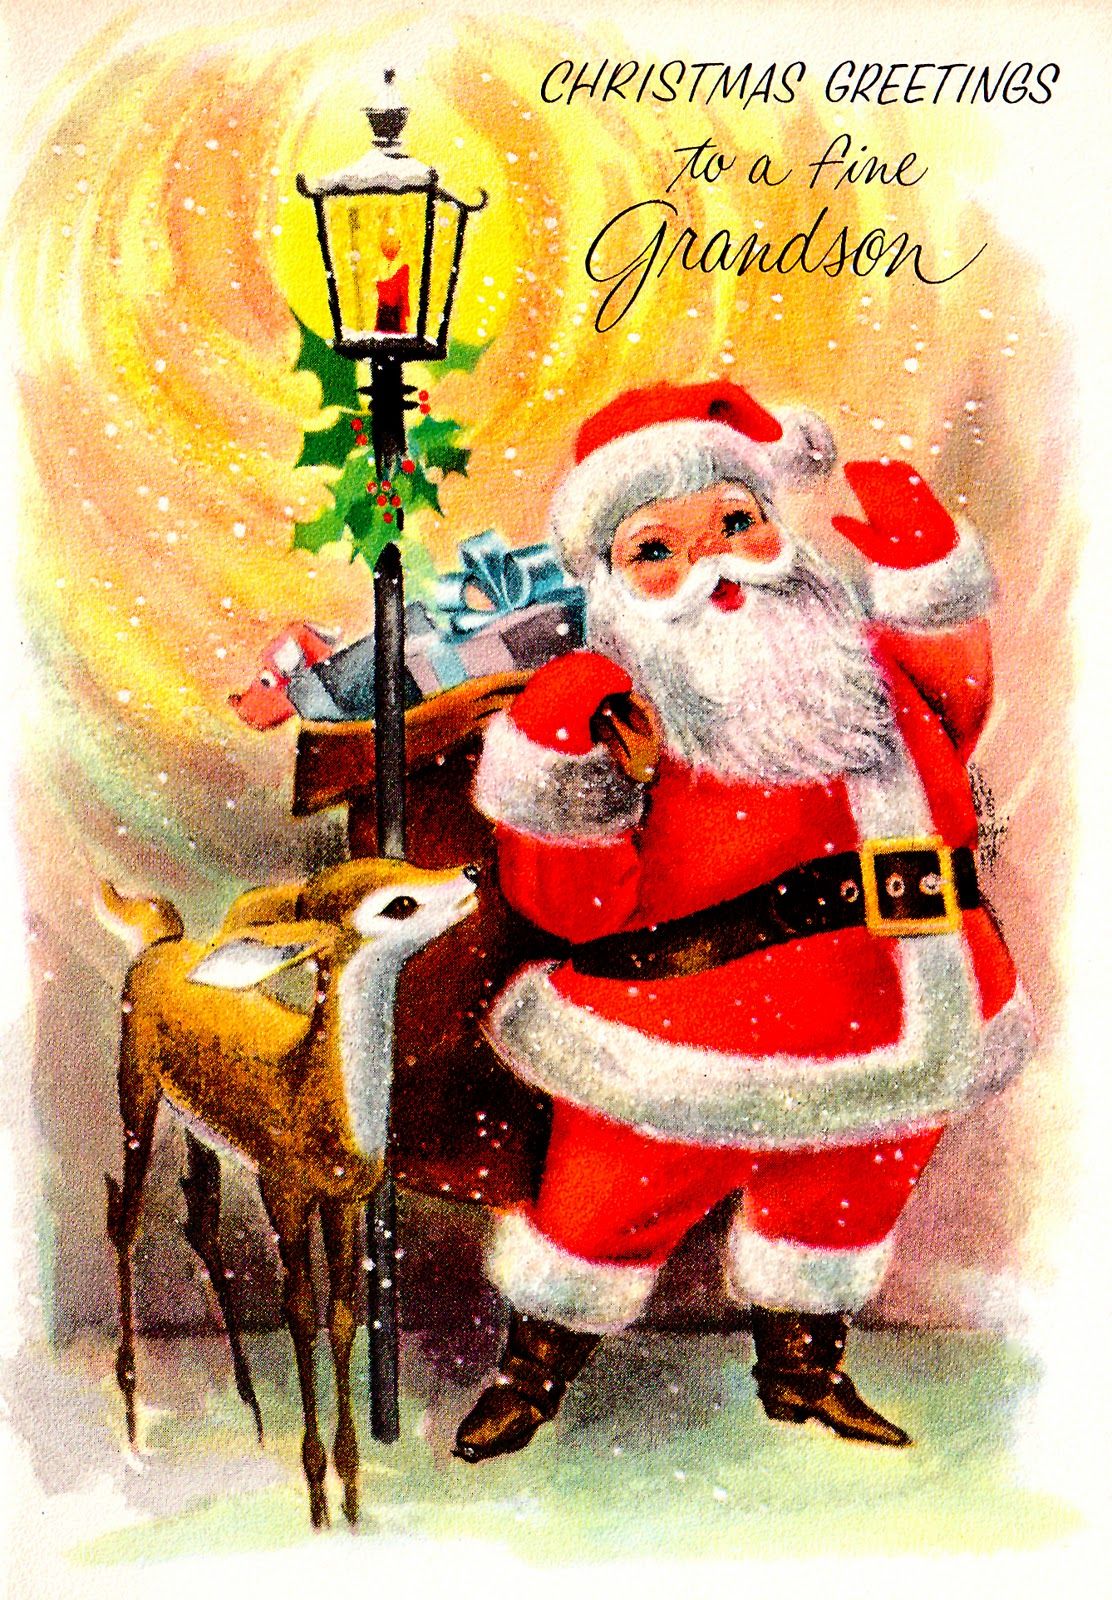 Vintage Christmas Wallpaper Images  Free Download on Freepik